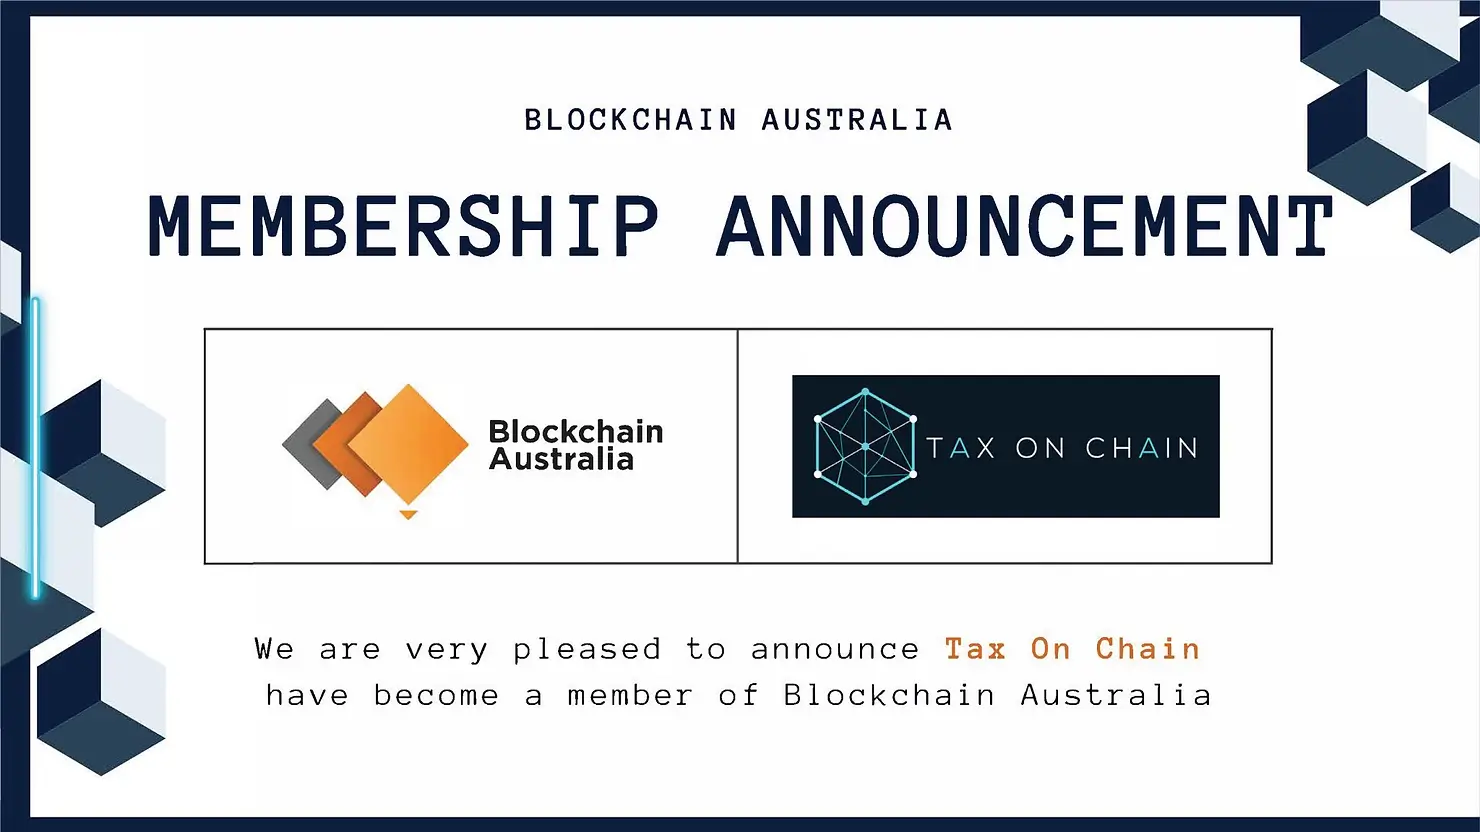 blog image - Tax On Chain becoming Blockchain Australia member announcement banner